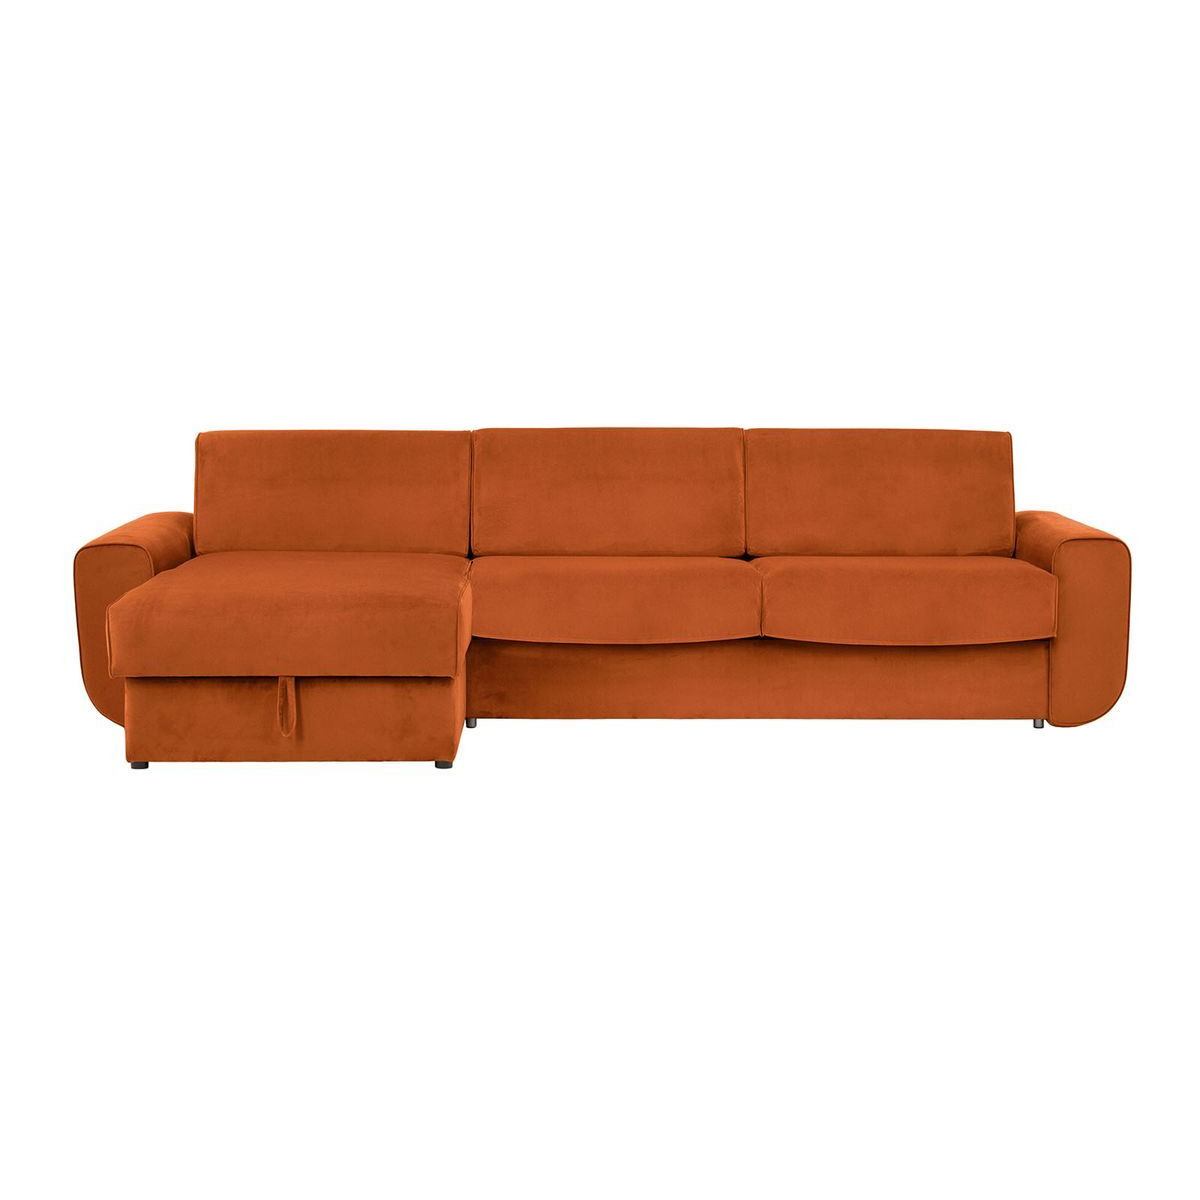 Salsa corner sofa bed with storage, boucle ivory - image 1